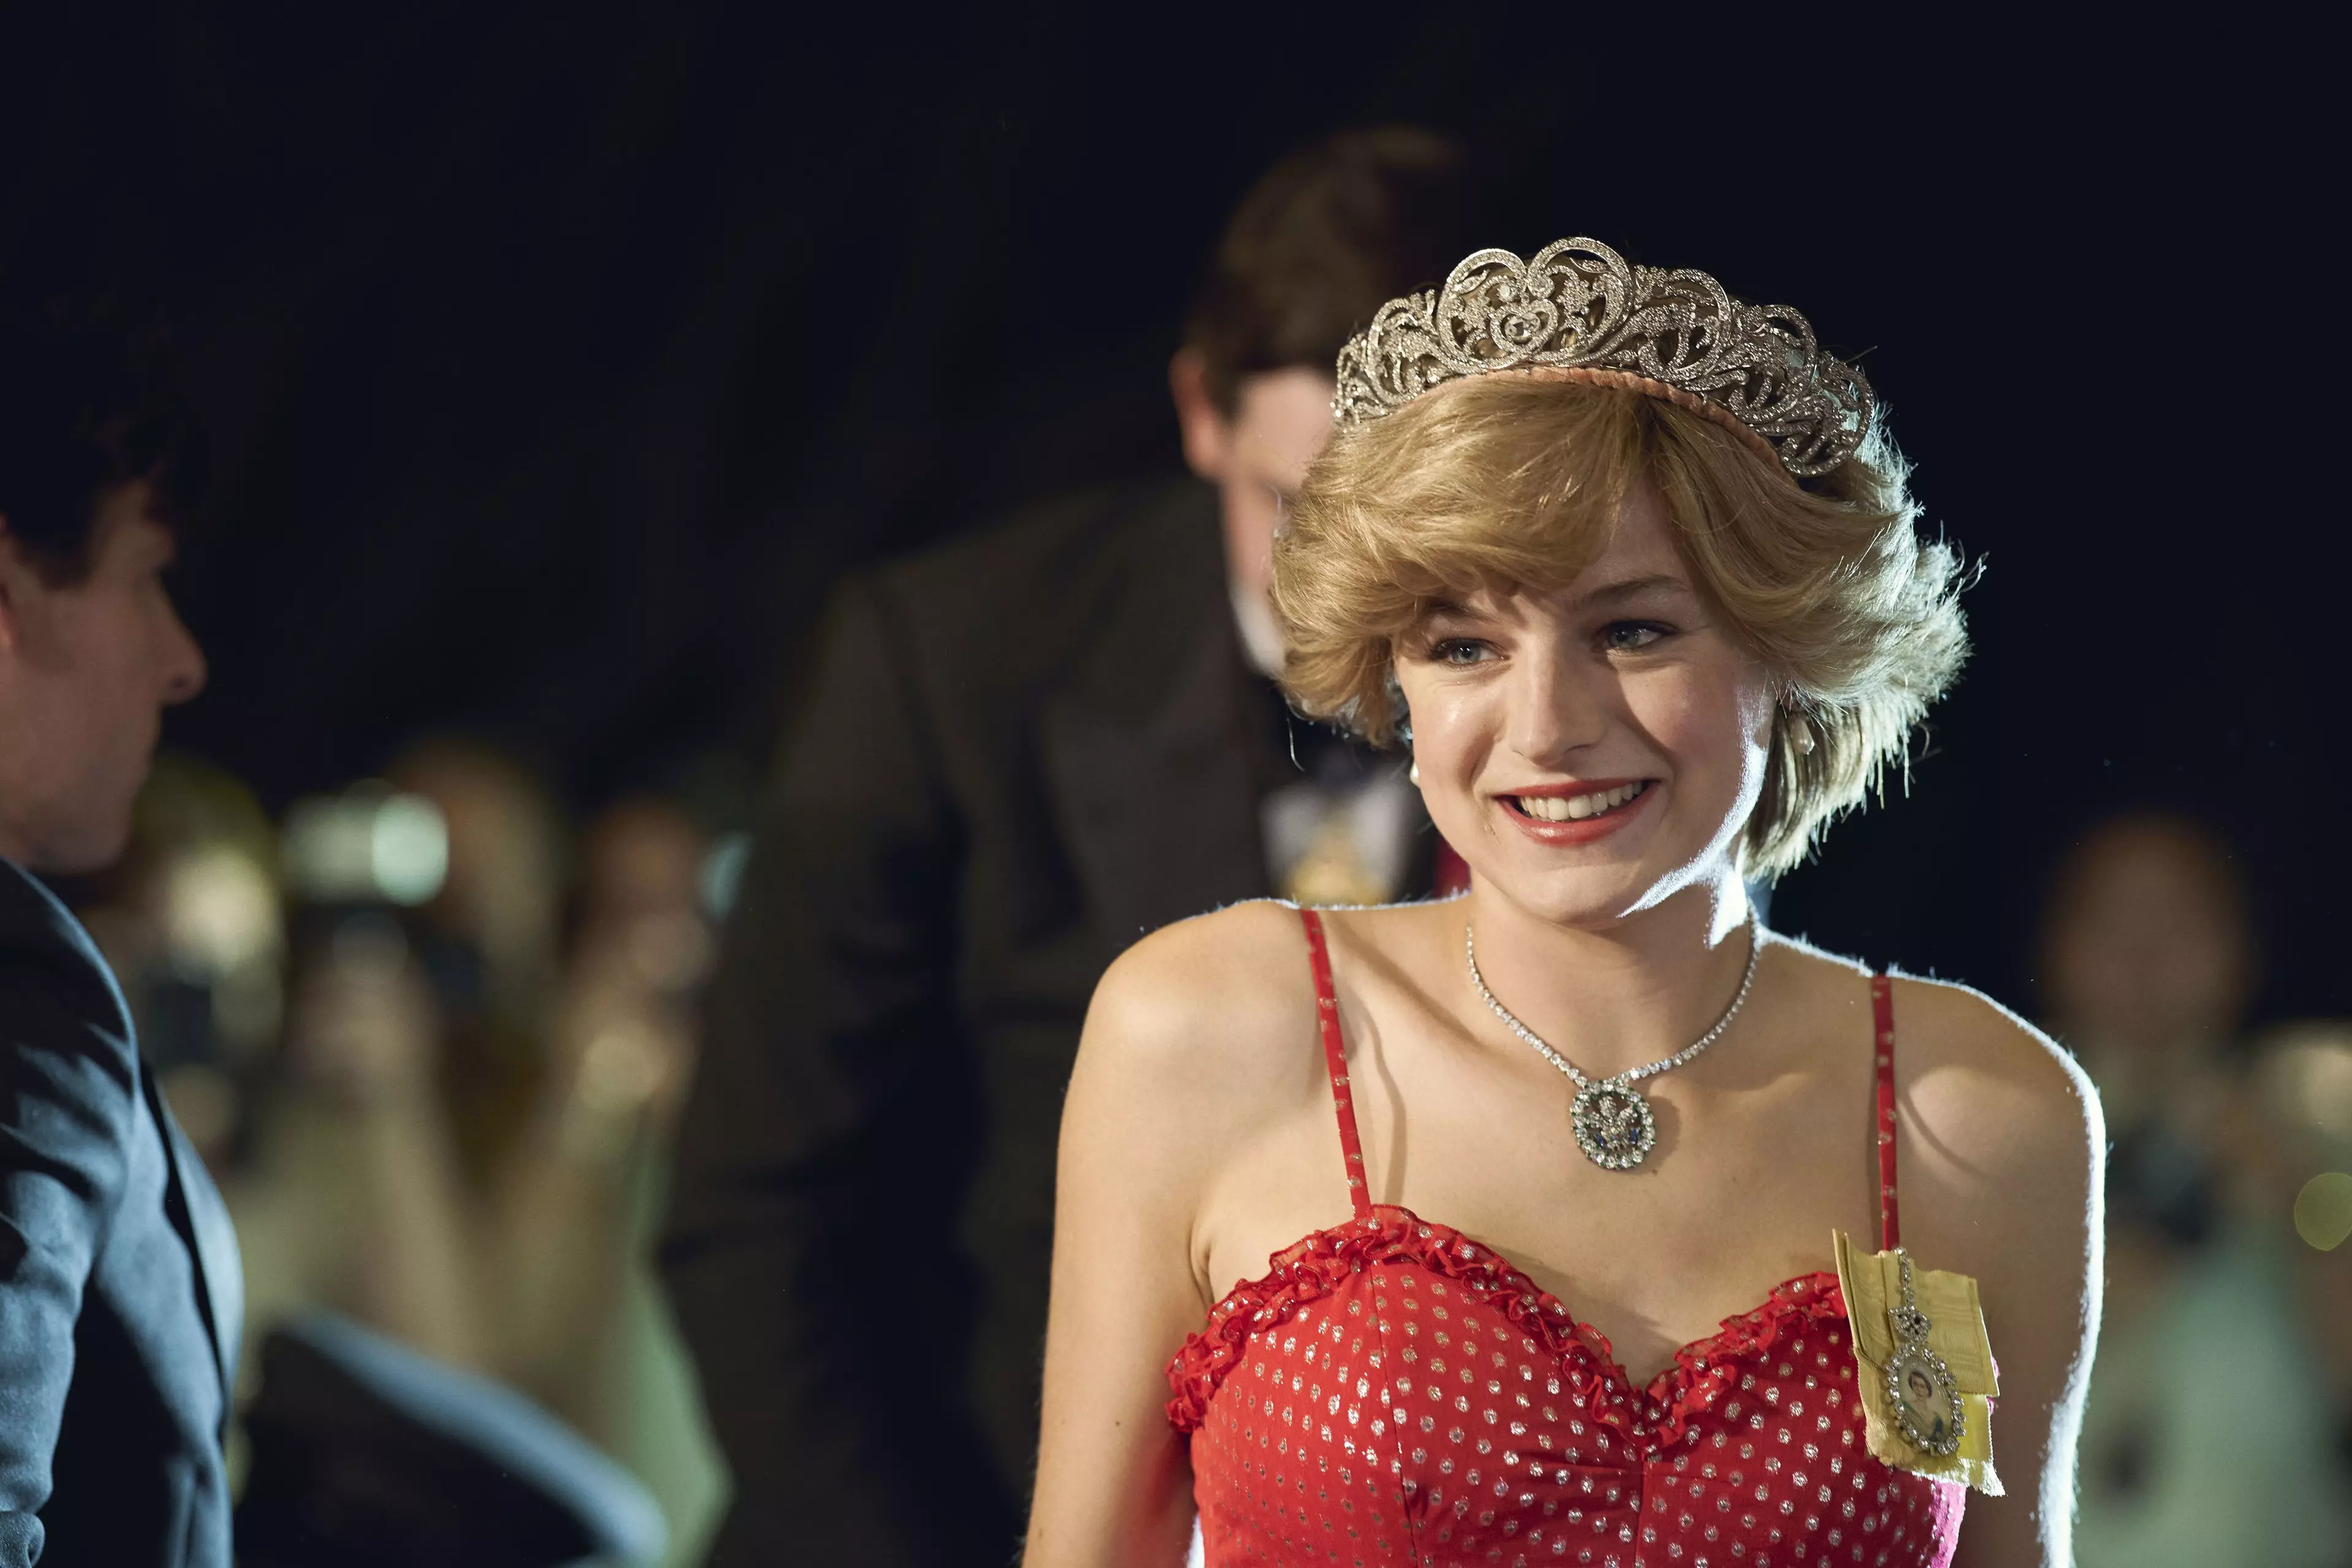 Emma Corrin played Princess Diana in season 4 (